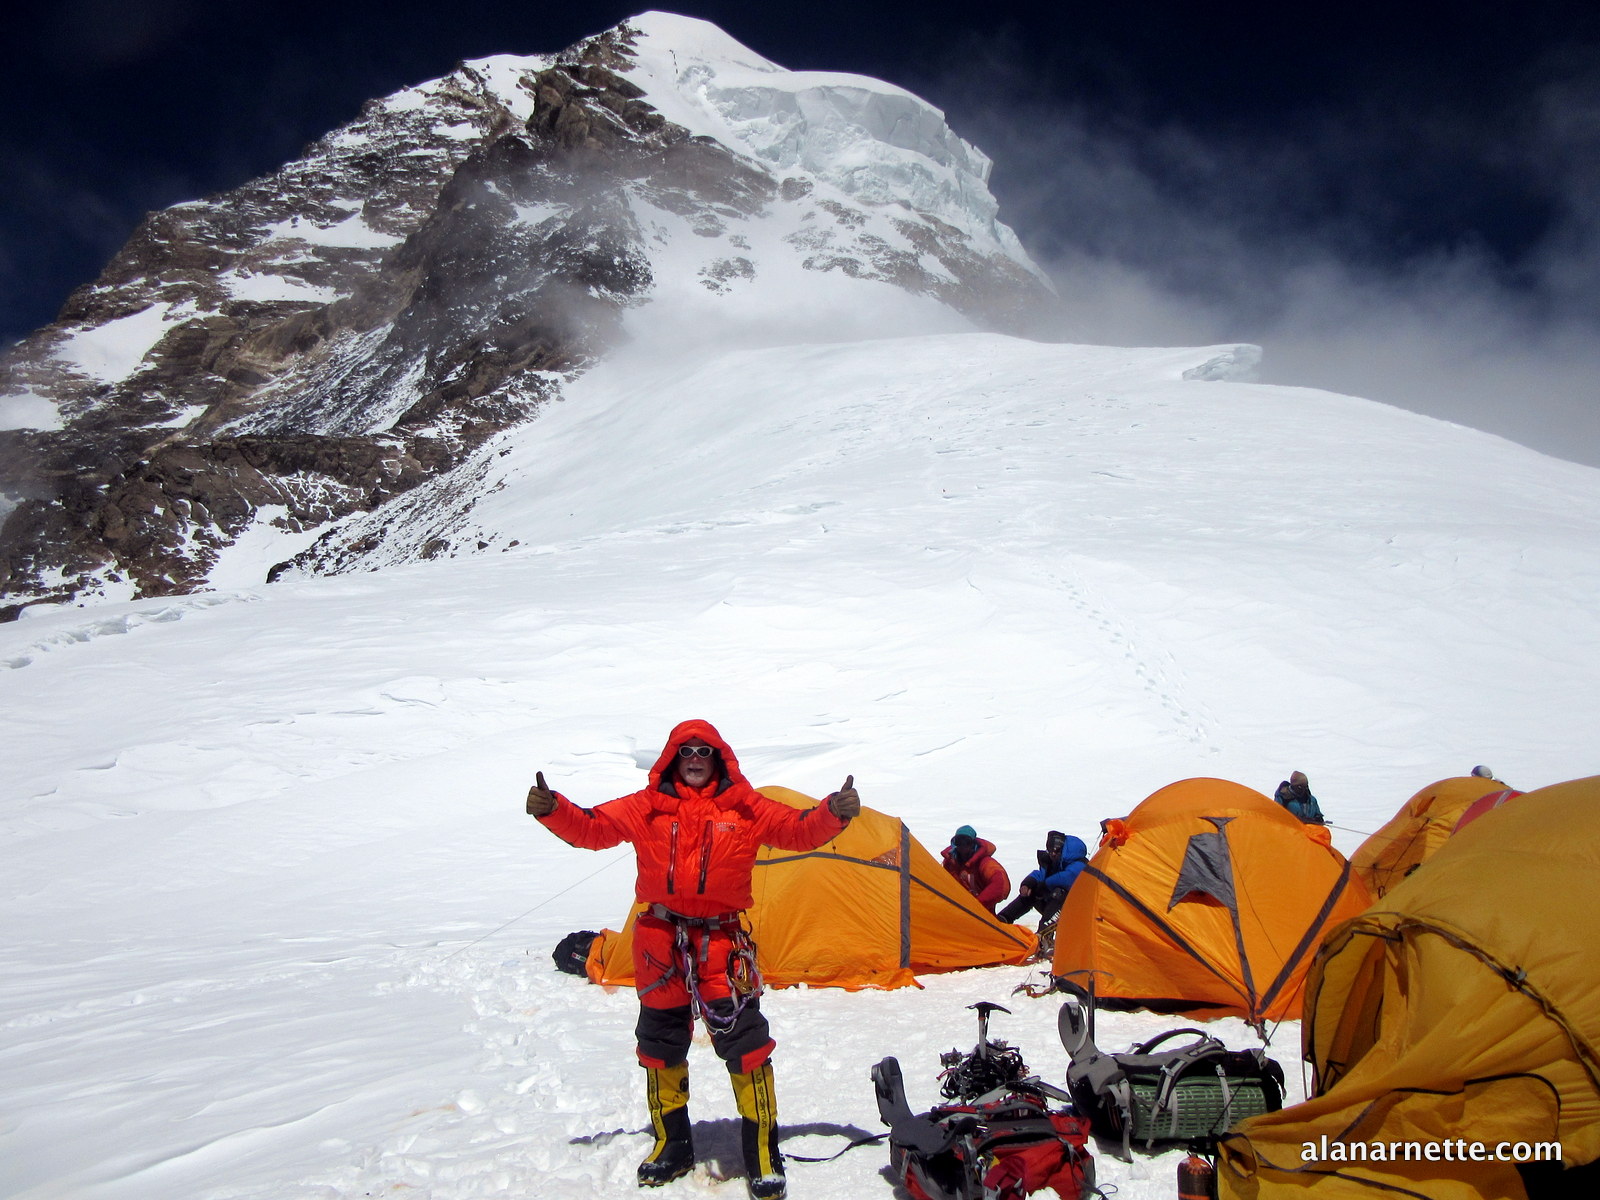 K2 Camp 4: 25,080'/7600m